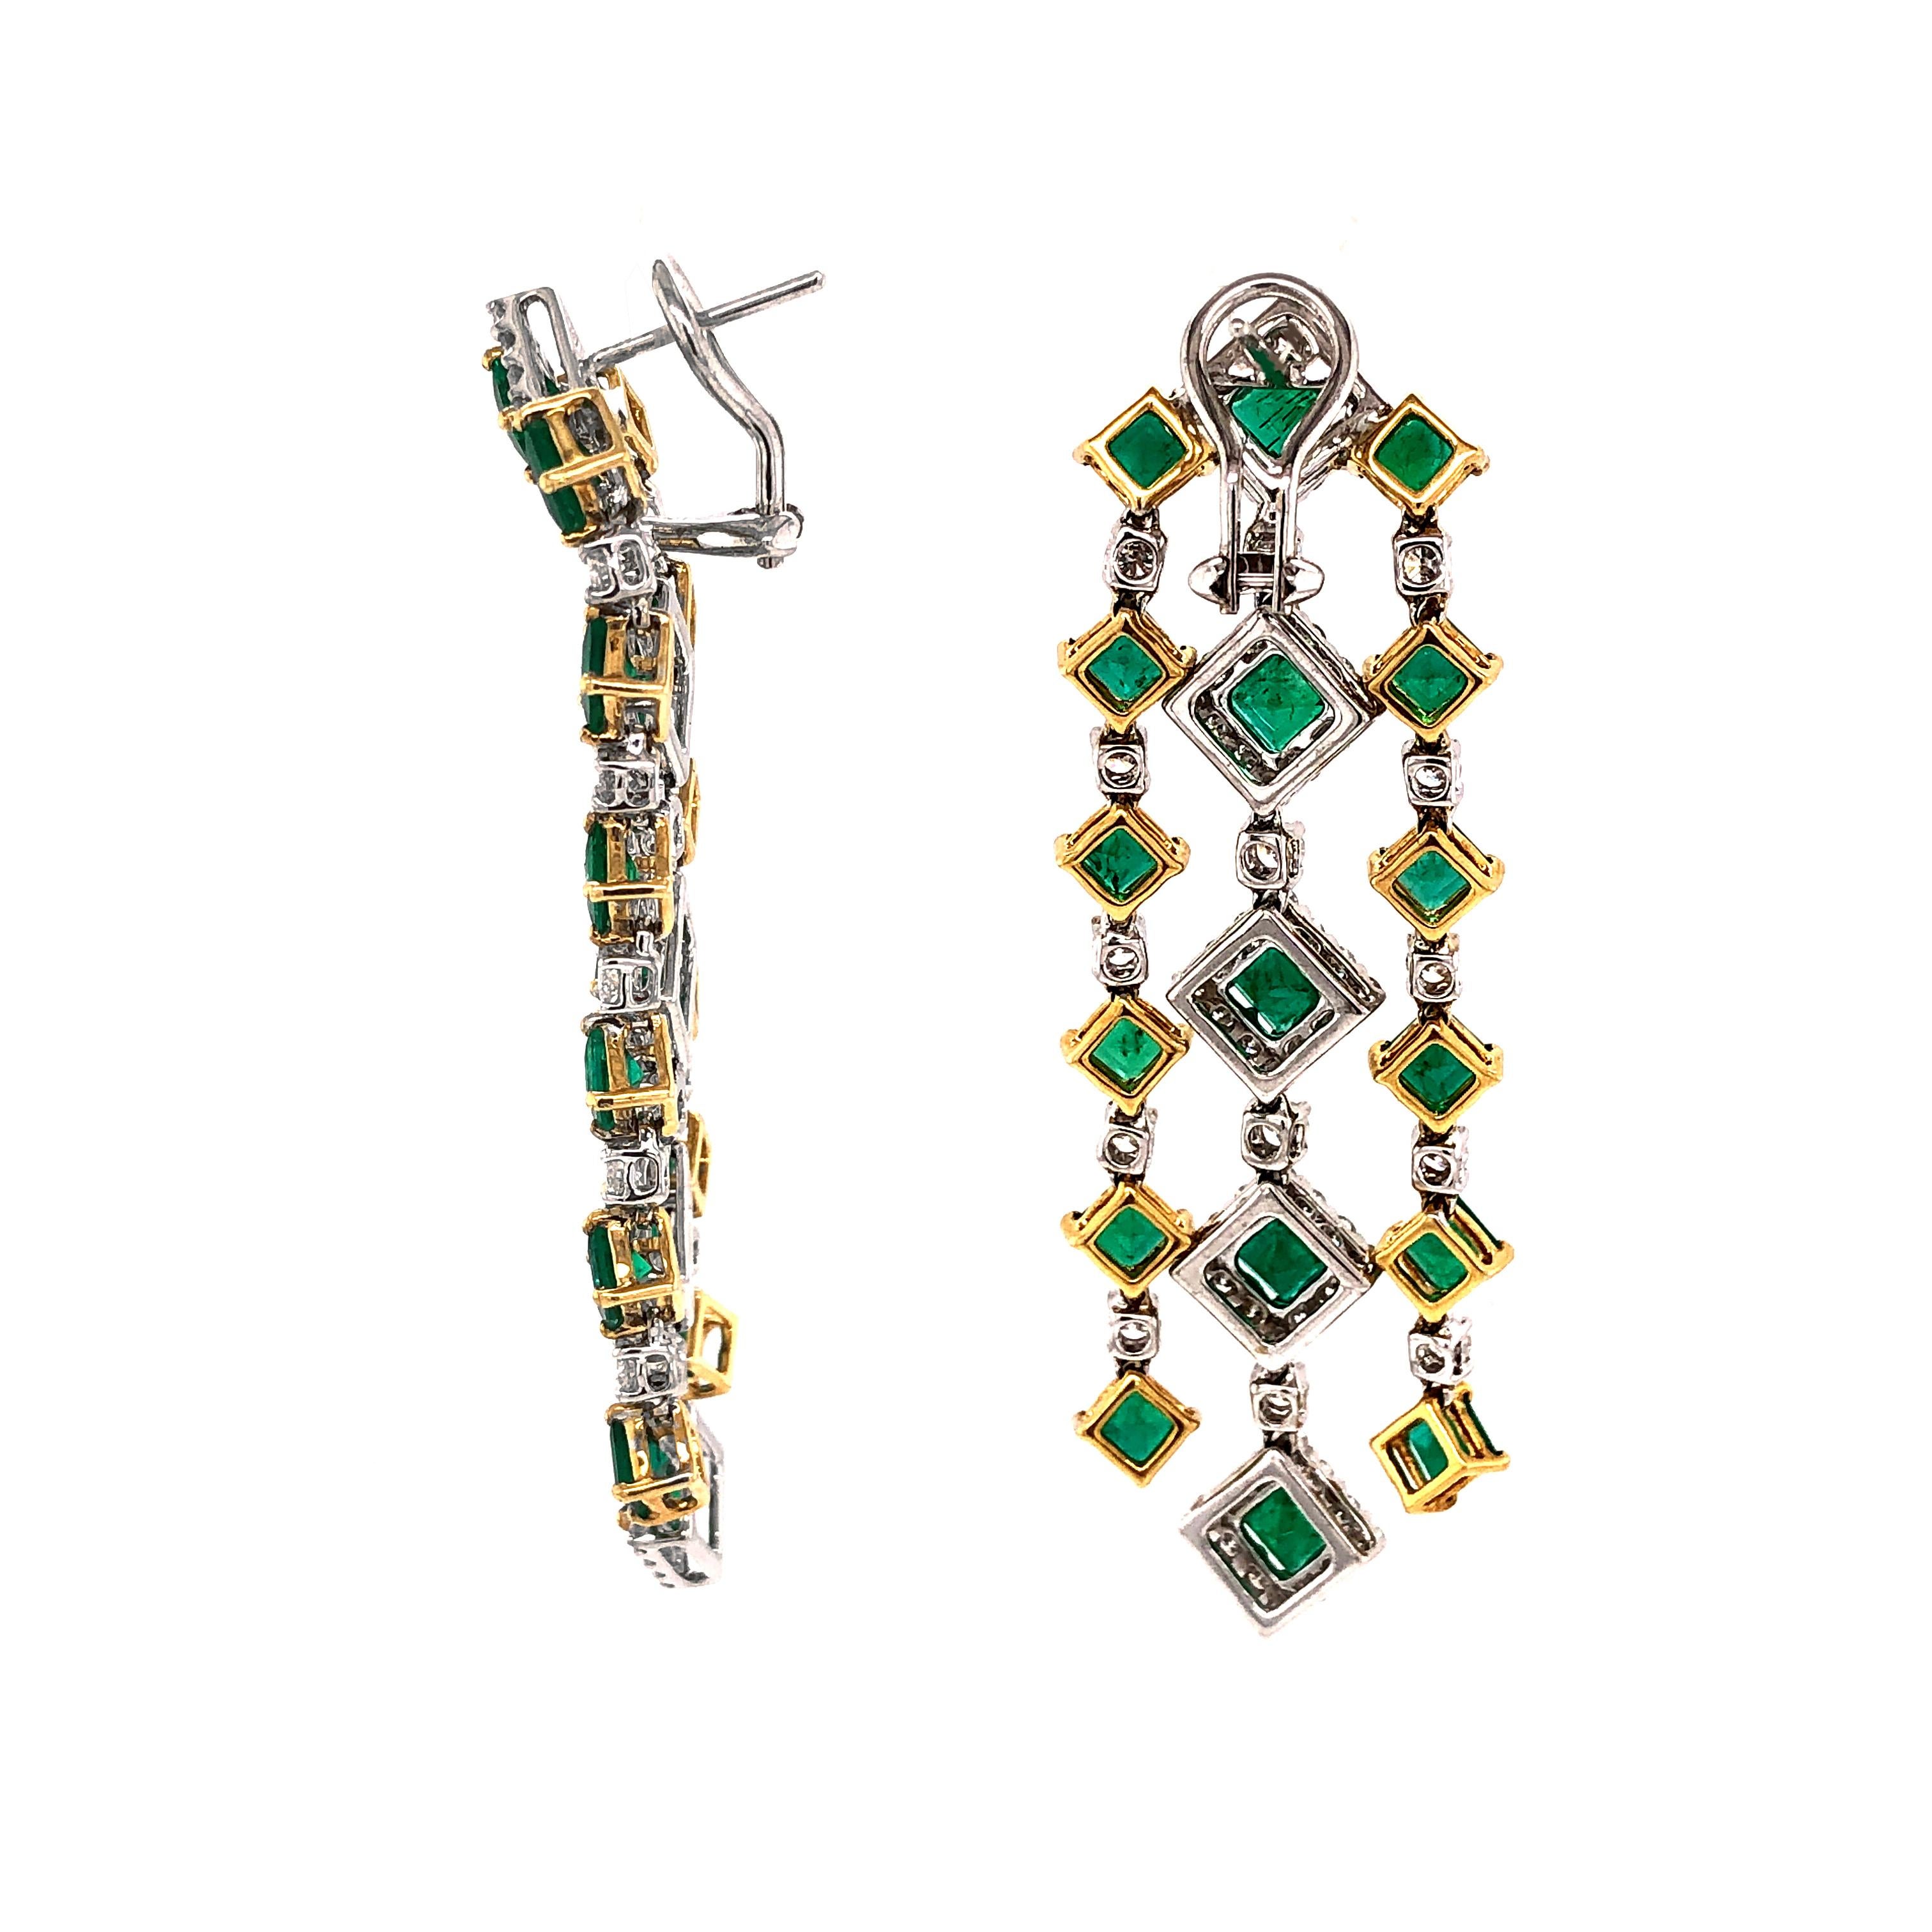 Contemporary Zambian Square Cut Emerald 11.09 Carat Diamond 18 Karat Gold Chandelier Earrings For Sale